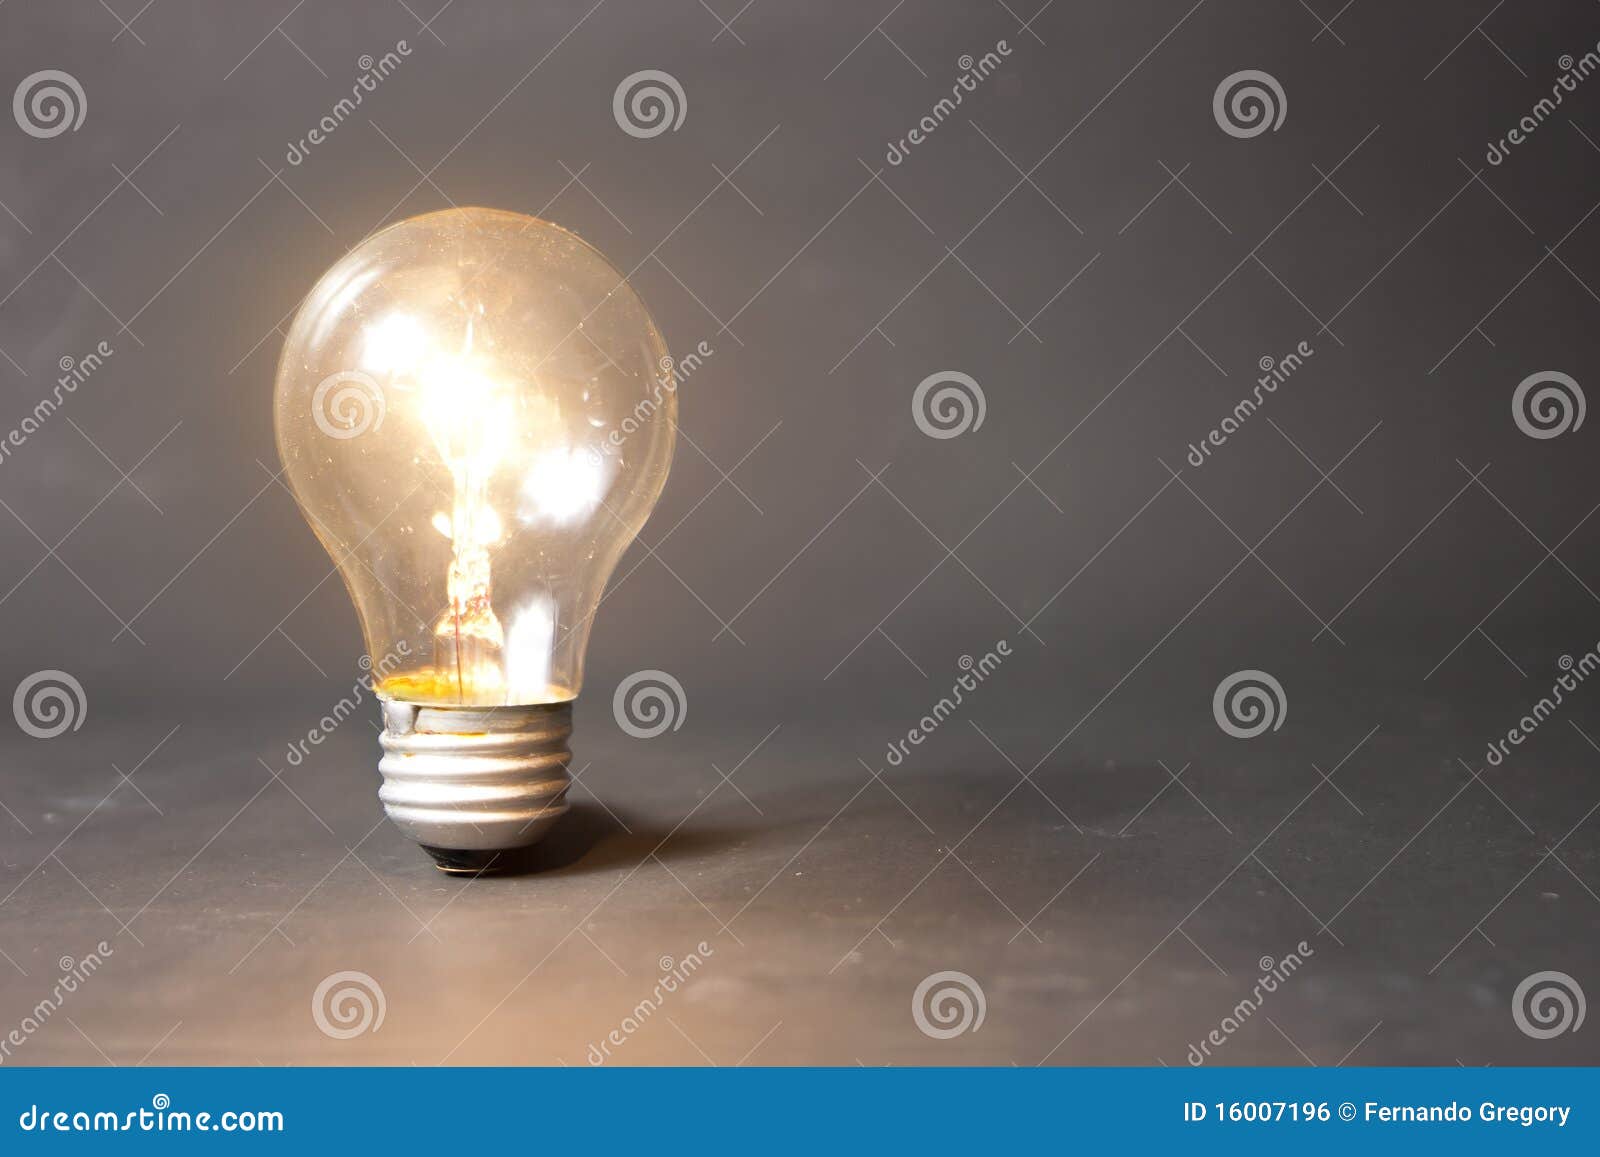 concept of bright idea with light bulb